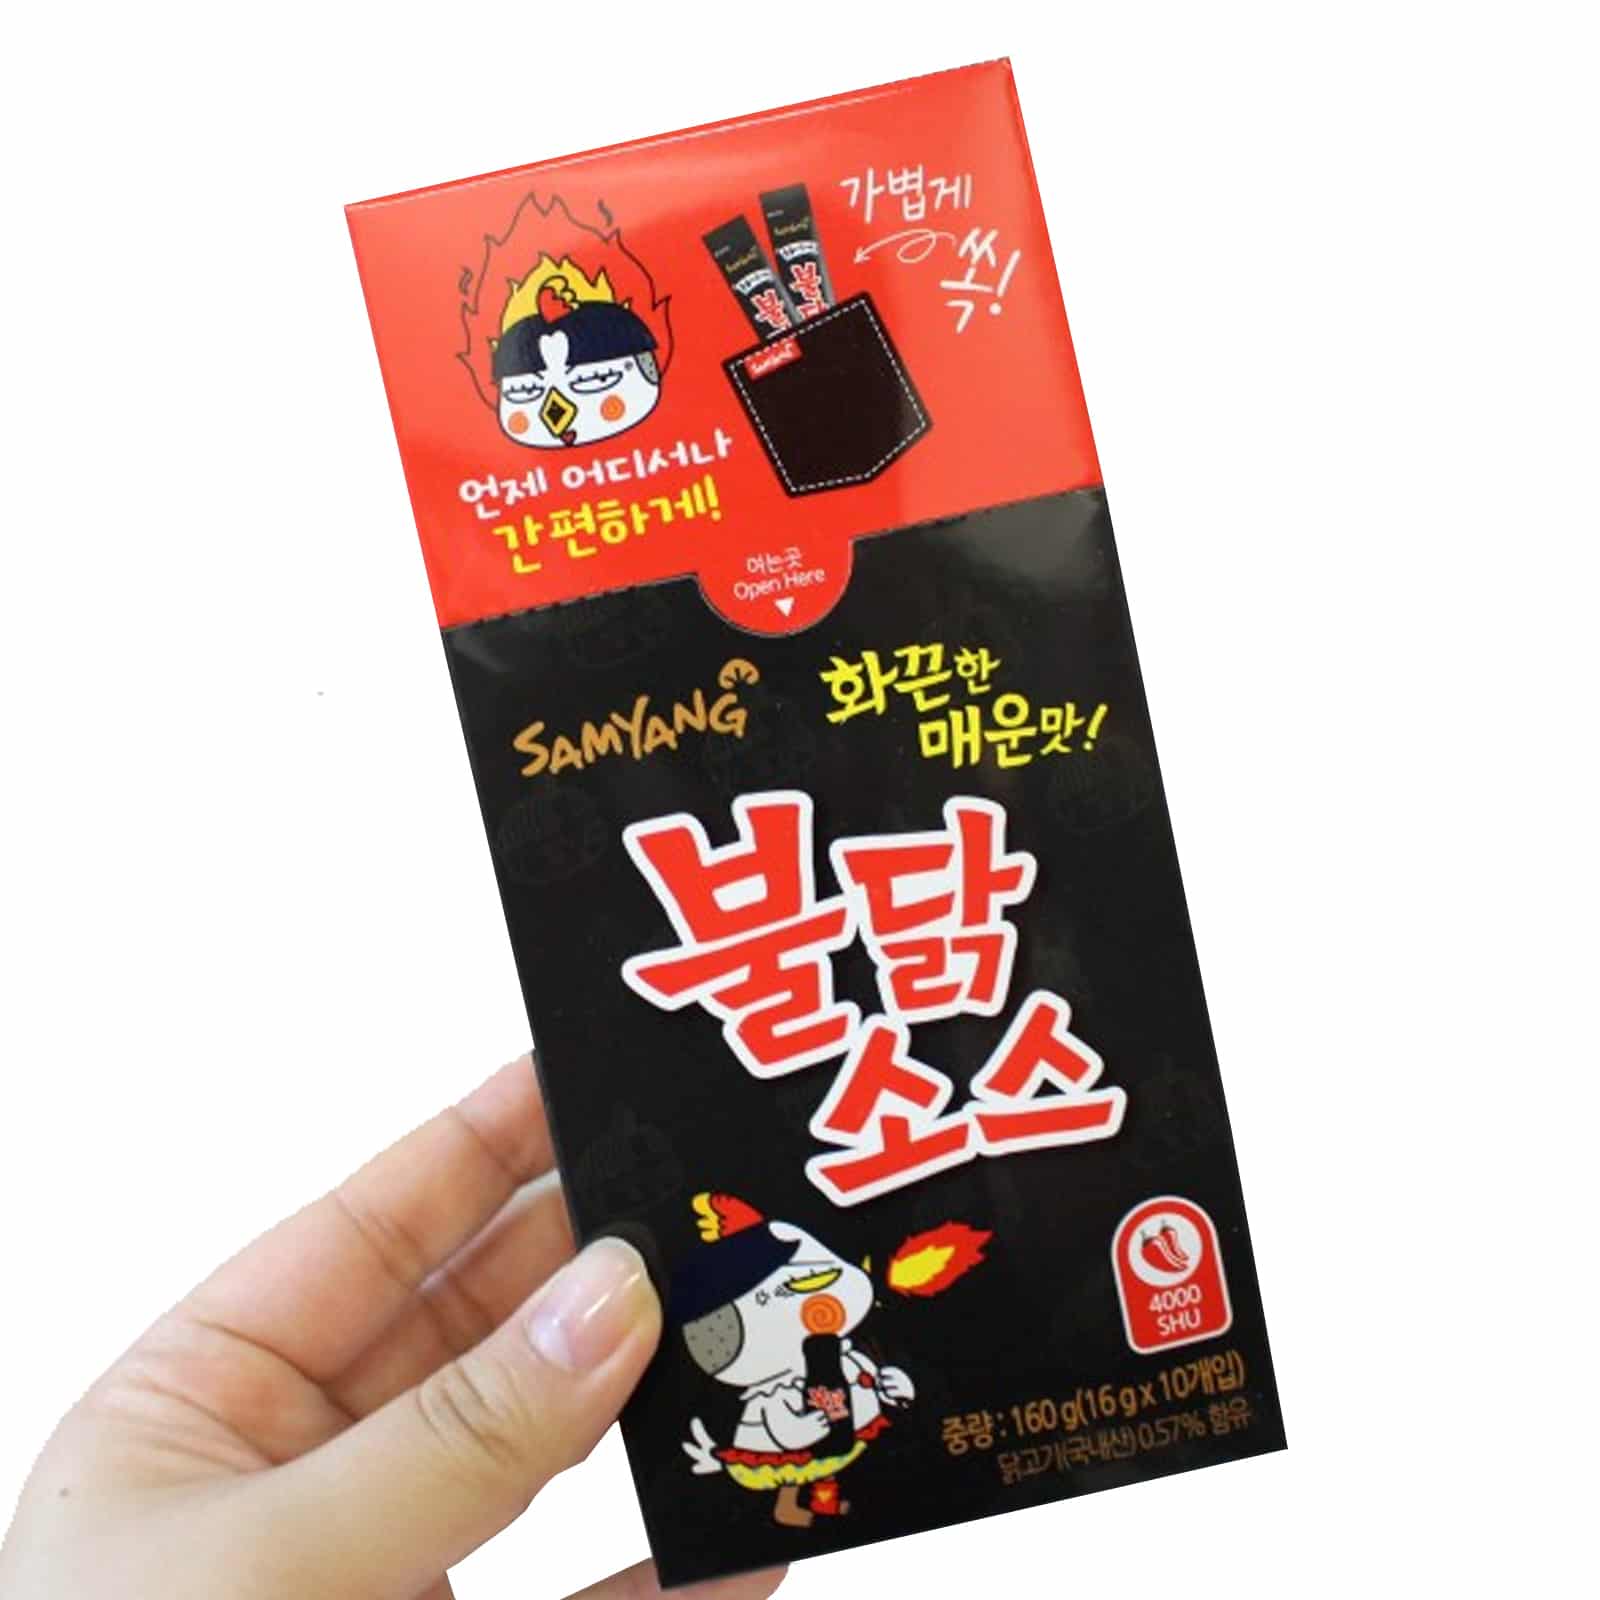 SAMYANG Spicy Chicken Buldak Roasted Seasoning Sauce Stick 160g